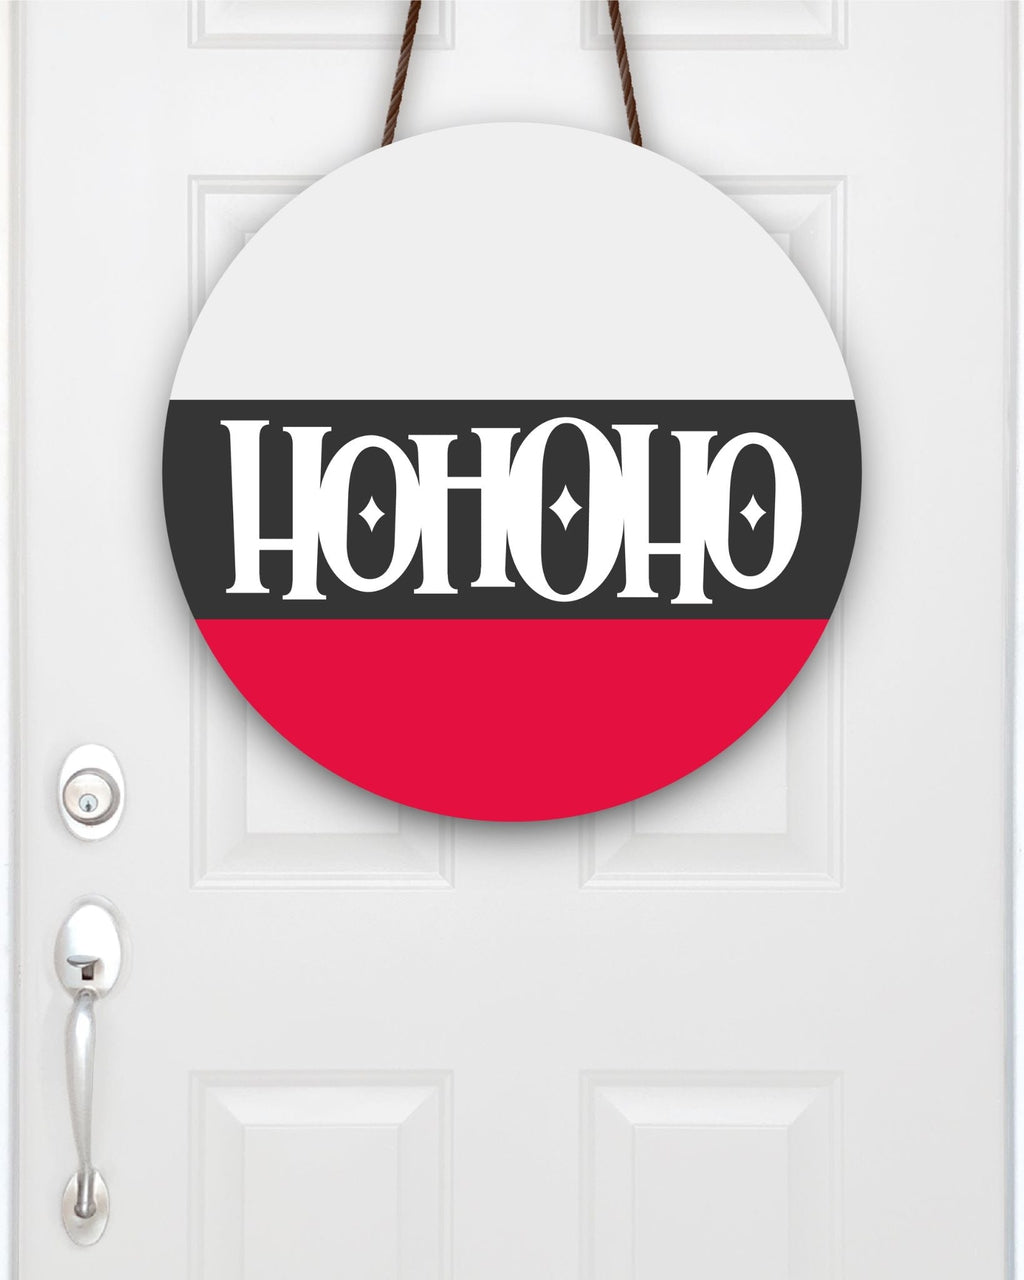 Ho Ho Ho Door Hanger/Sign